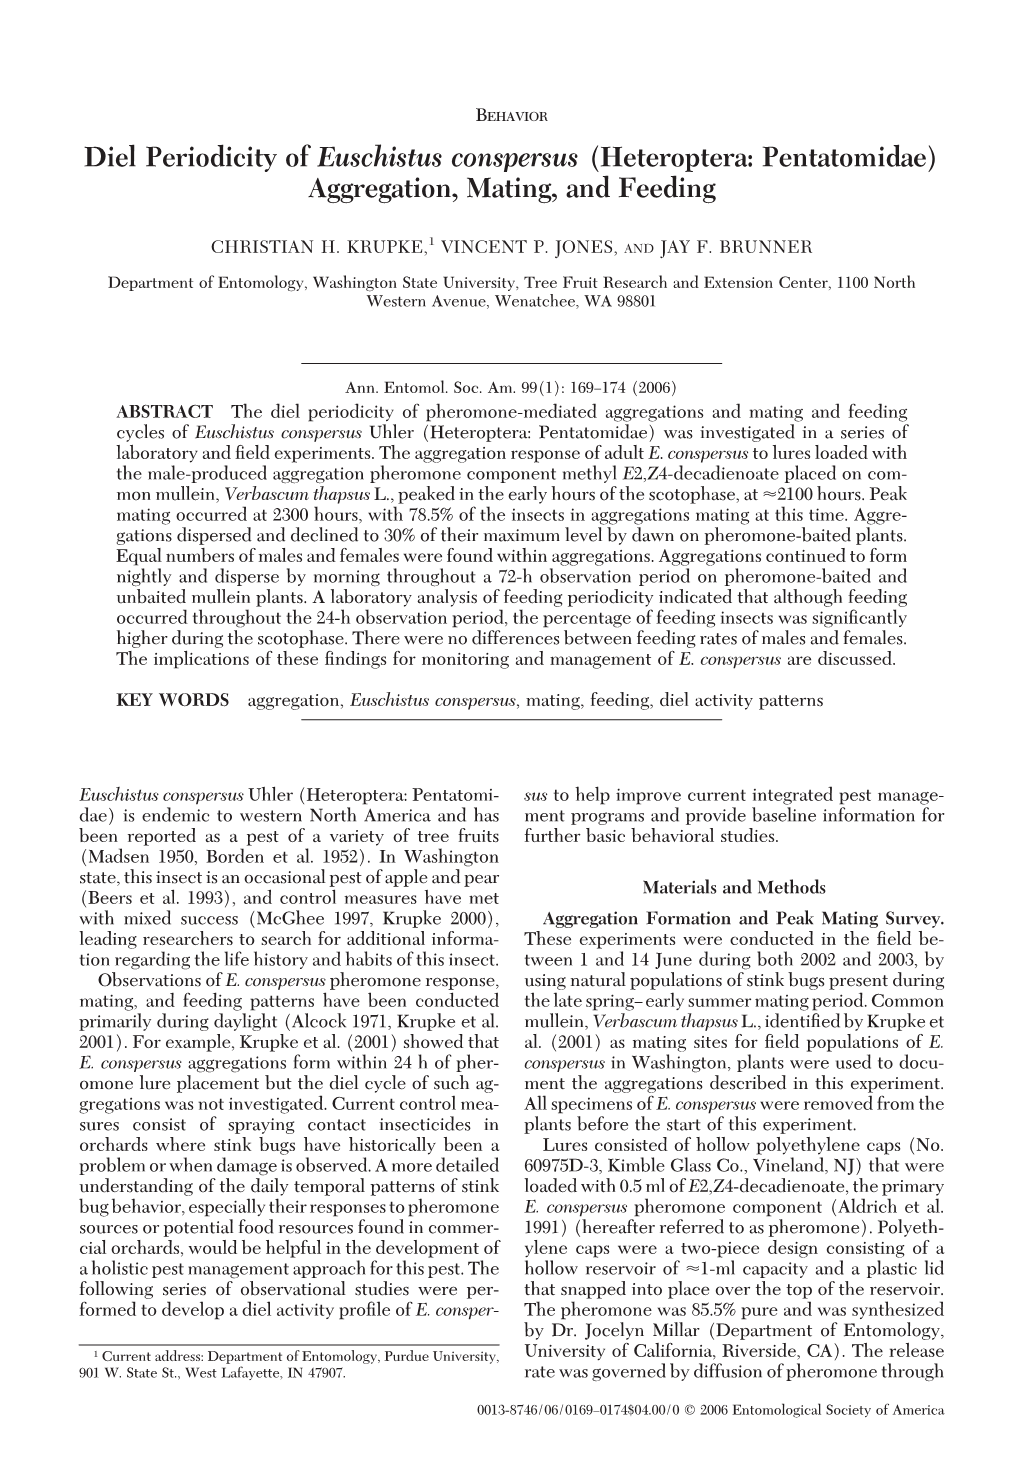 Diel Periodicity of Euschistus Conspersus (Heteroptera: Pentatomidae) Aggregation, Mating, and Feeding